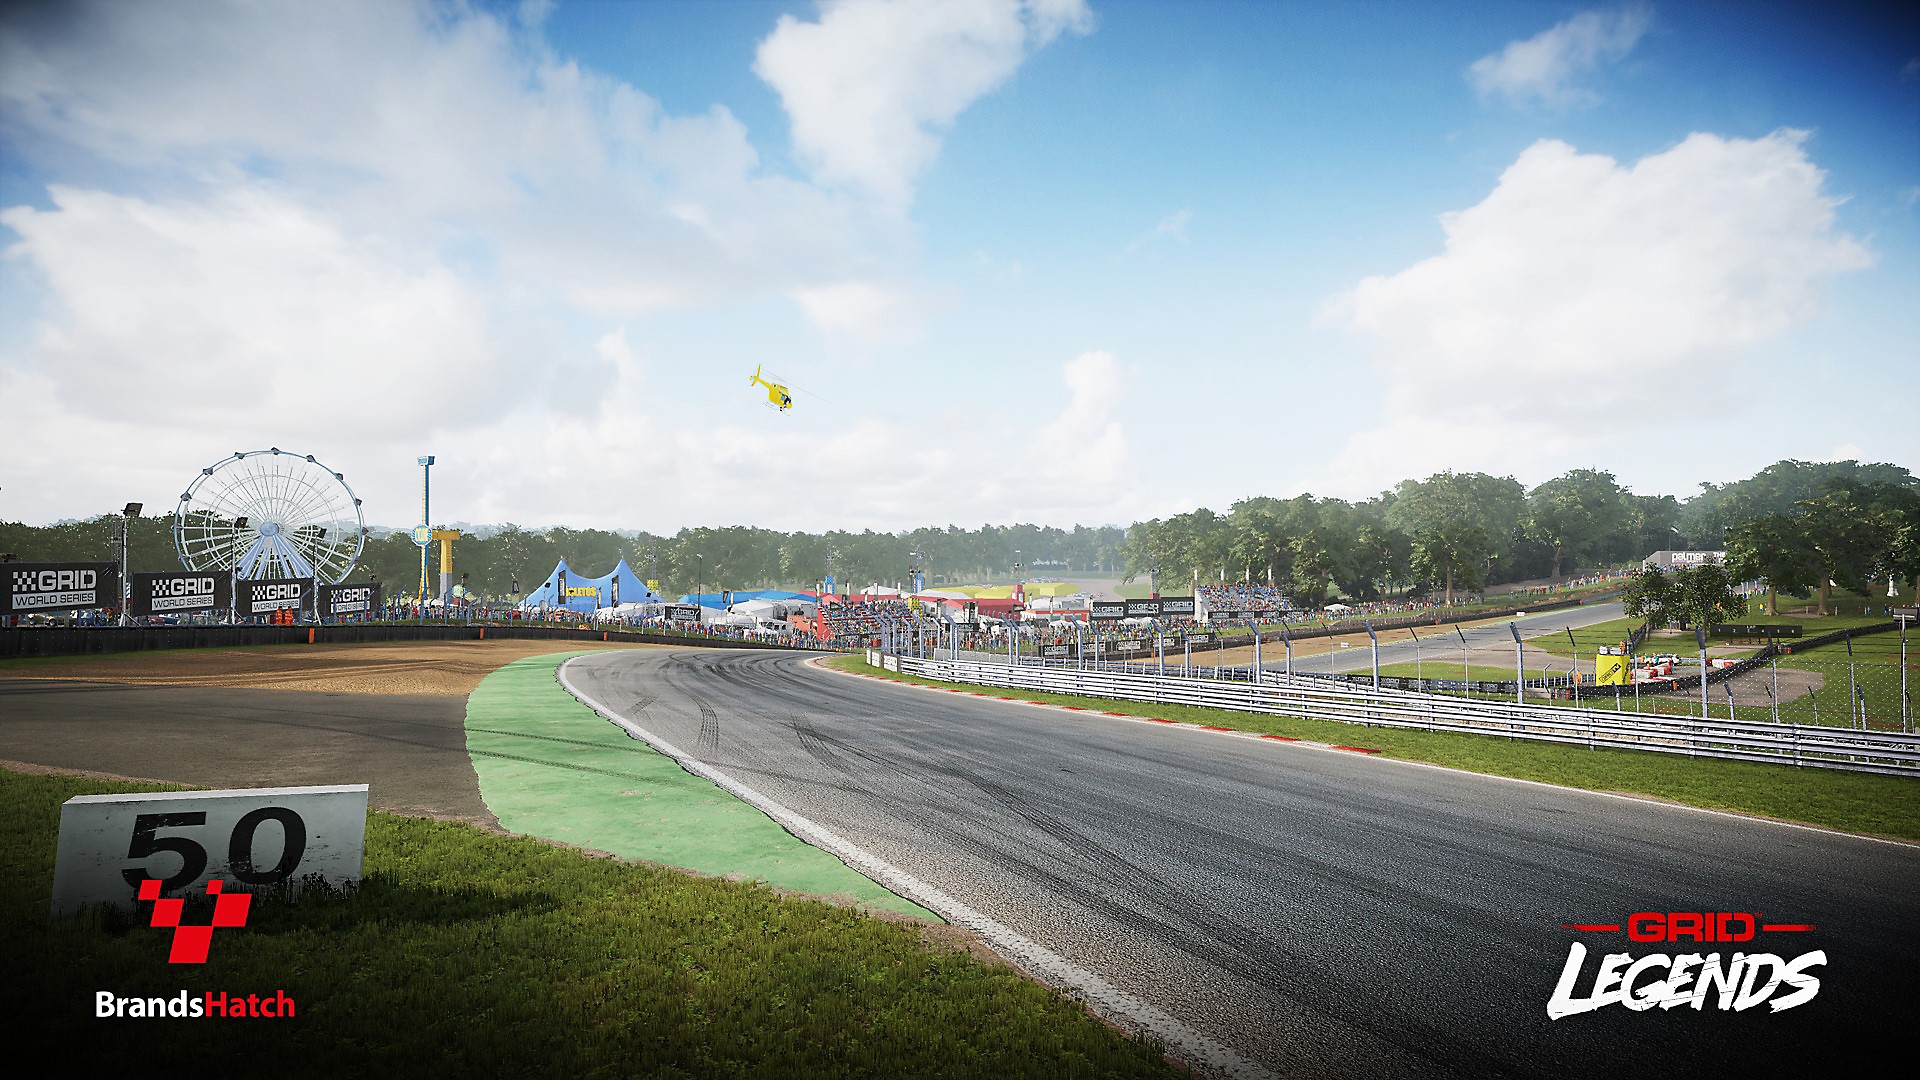 GRID Legends track screenshot - Brands Hatch track circuit